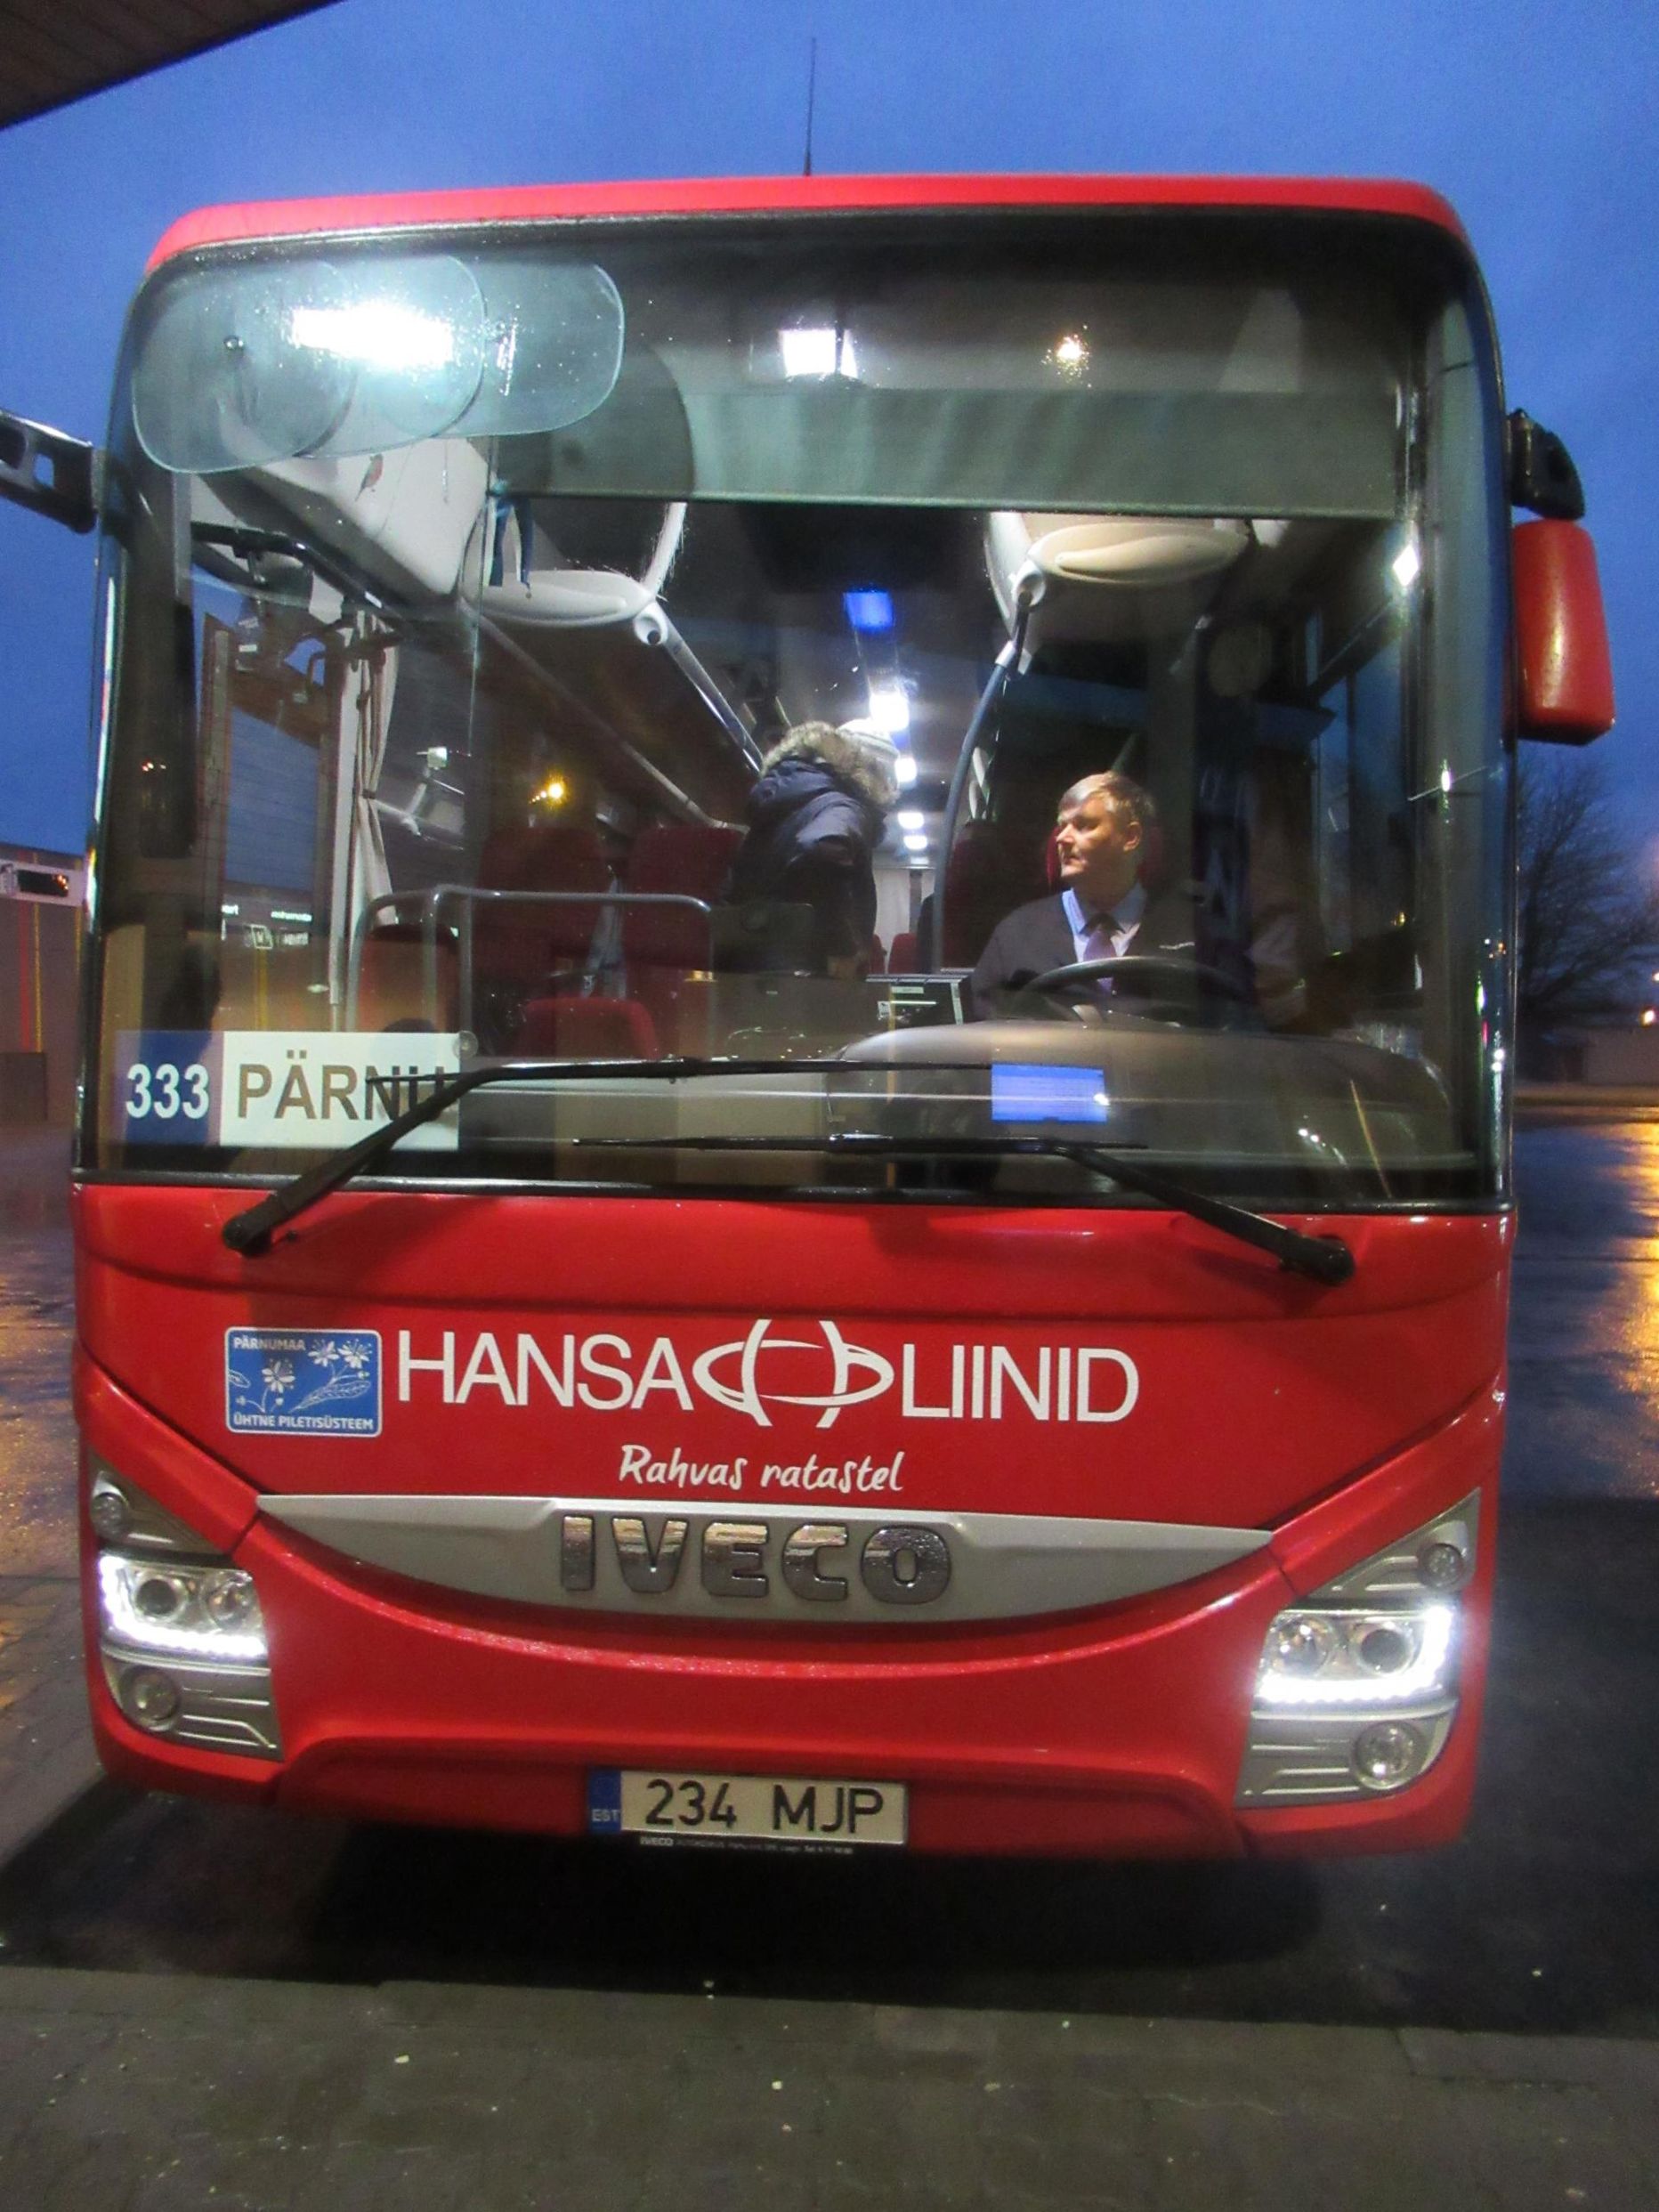 Hansa Bussiliinide buss.